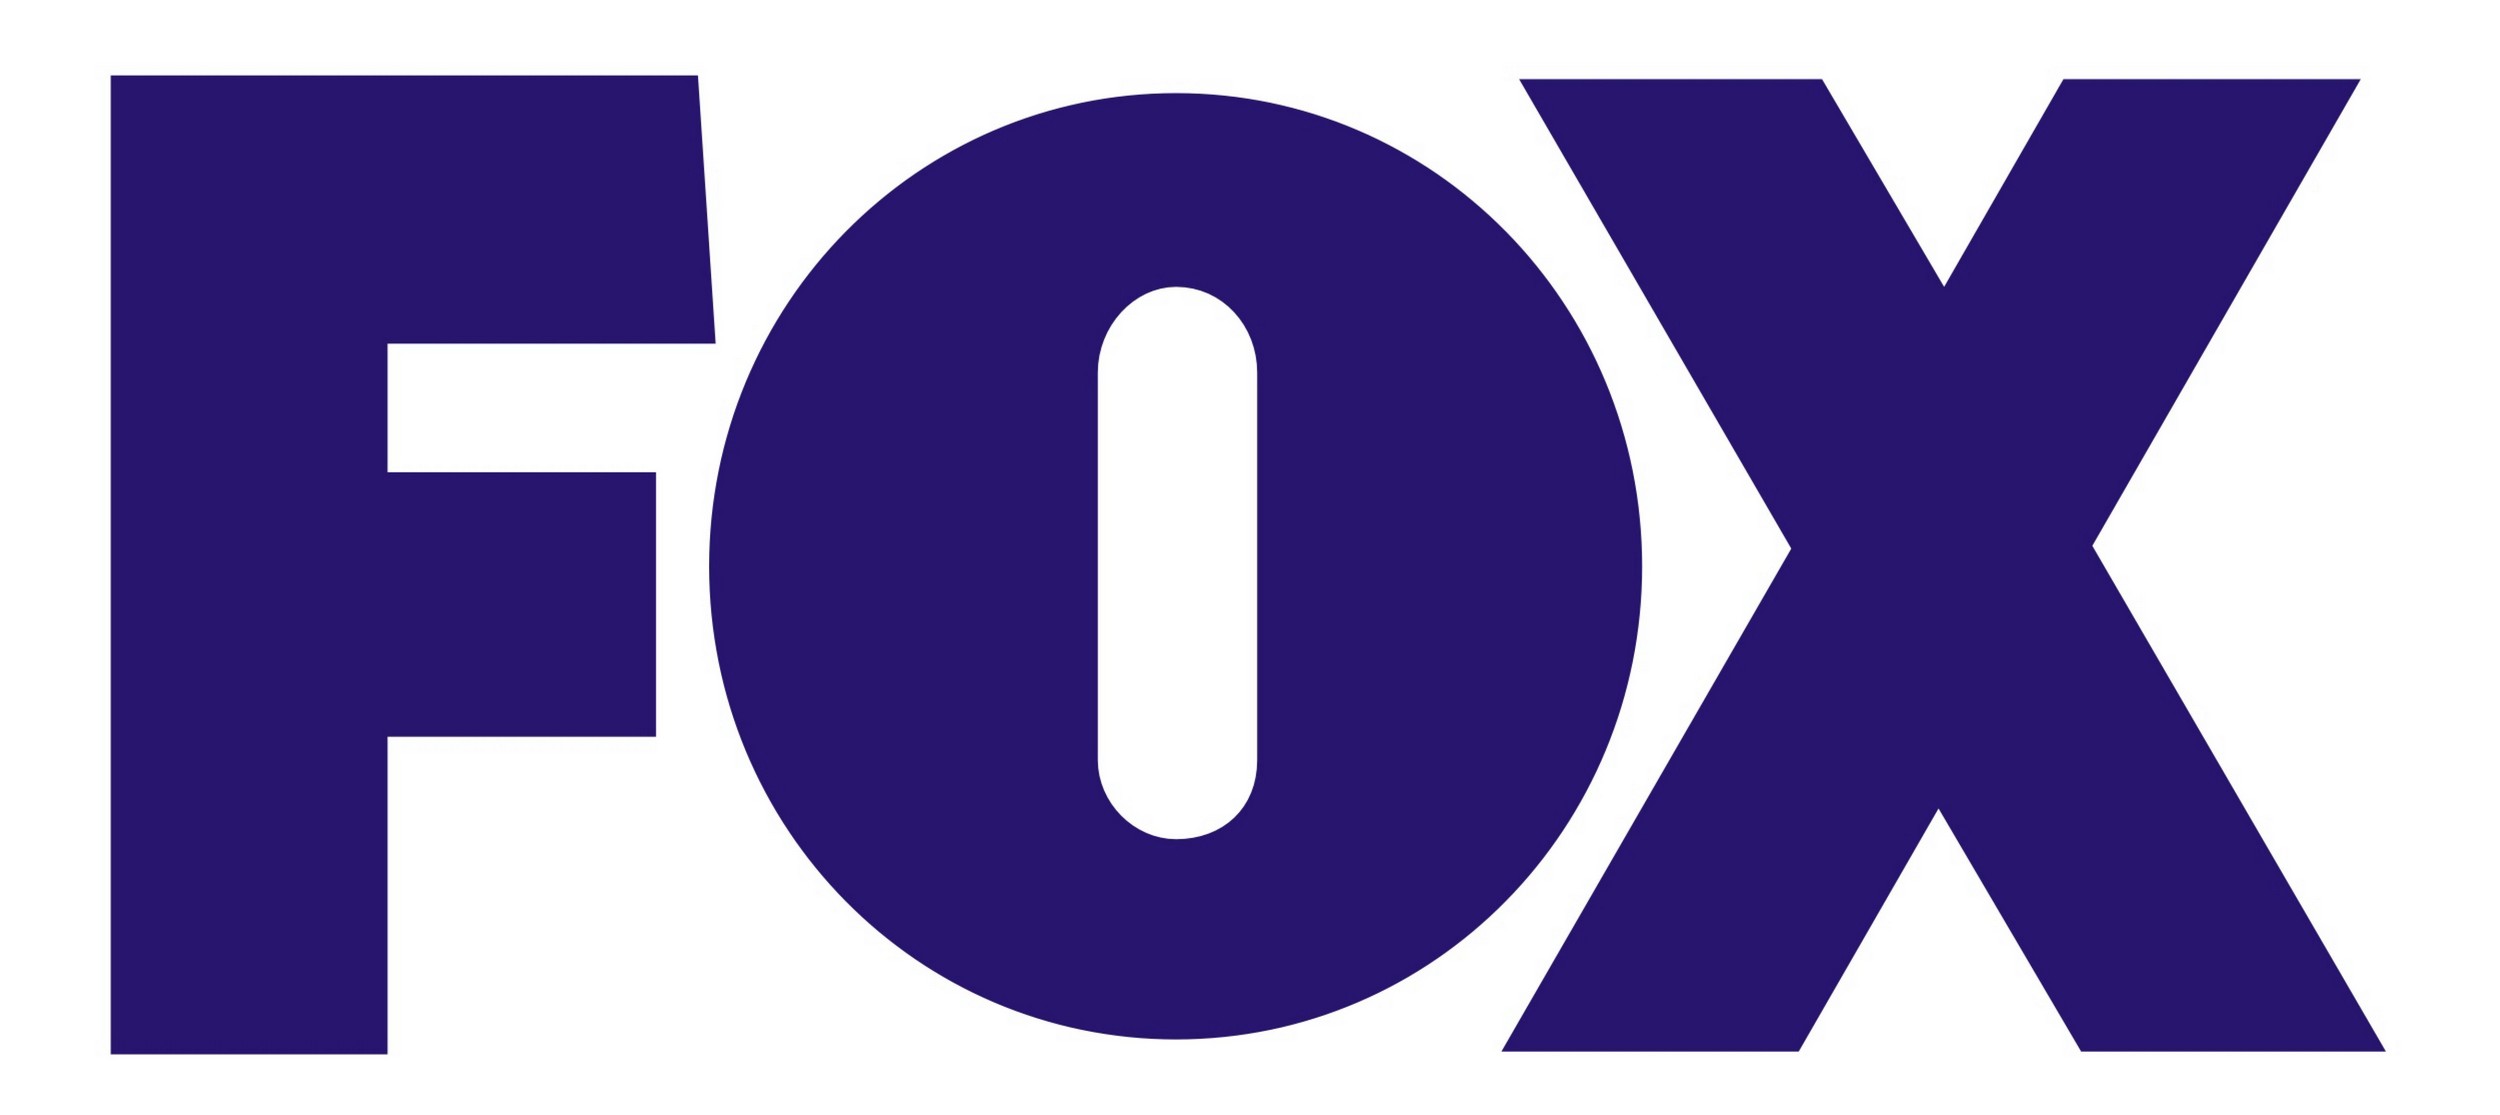 Fox Logo Eps PNG - 112251